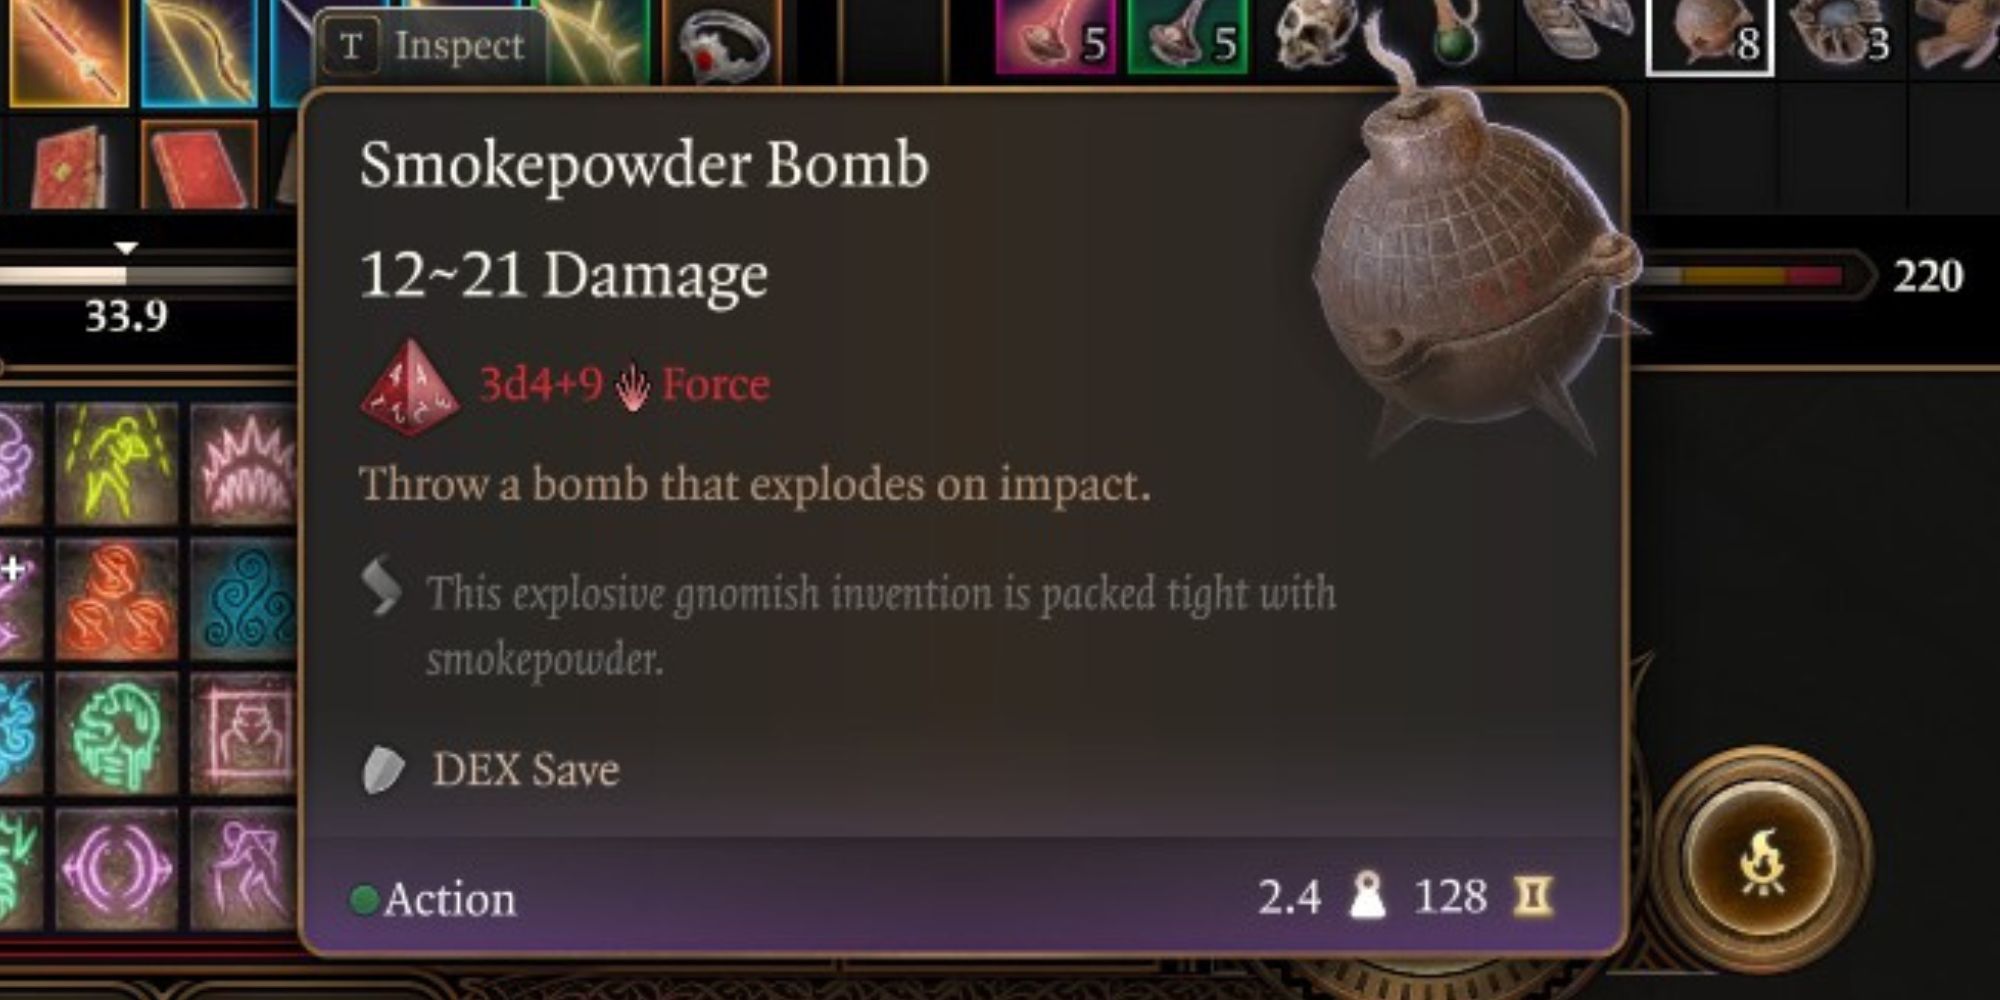 A Smokepowder Bomb in Baldur's Gate 3